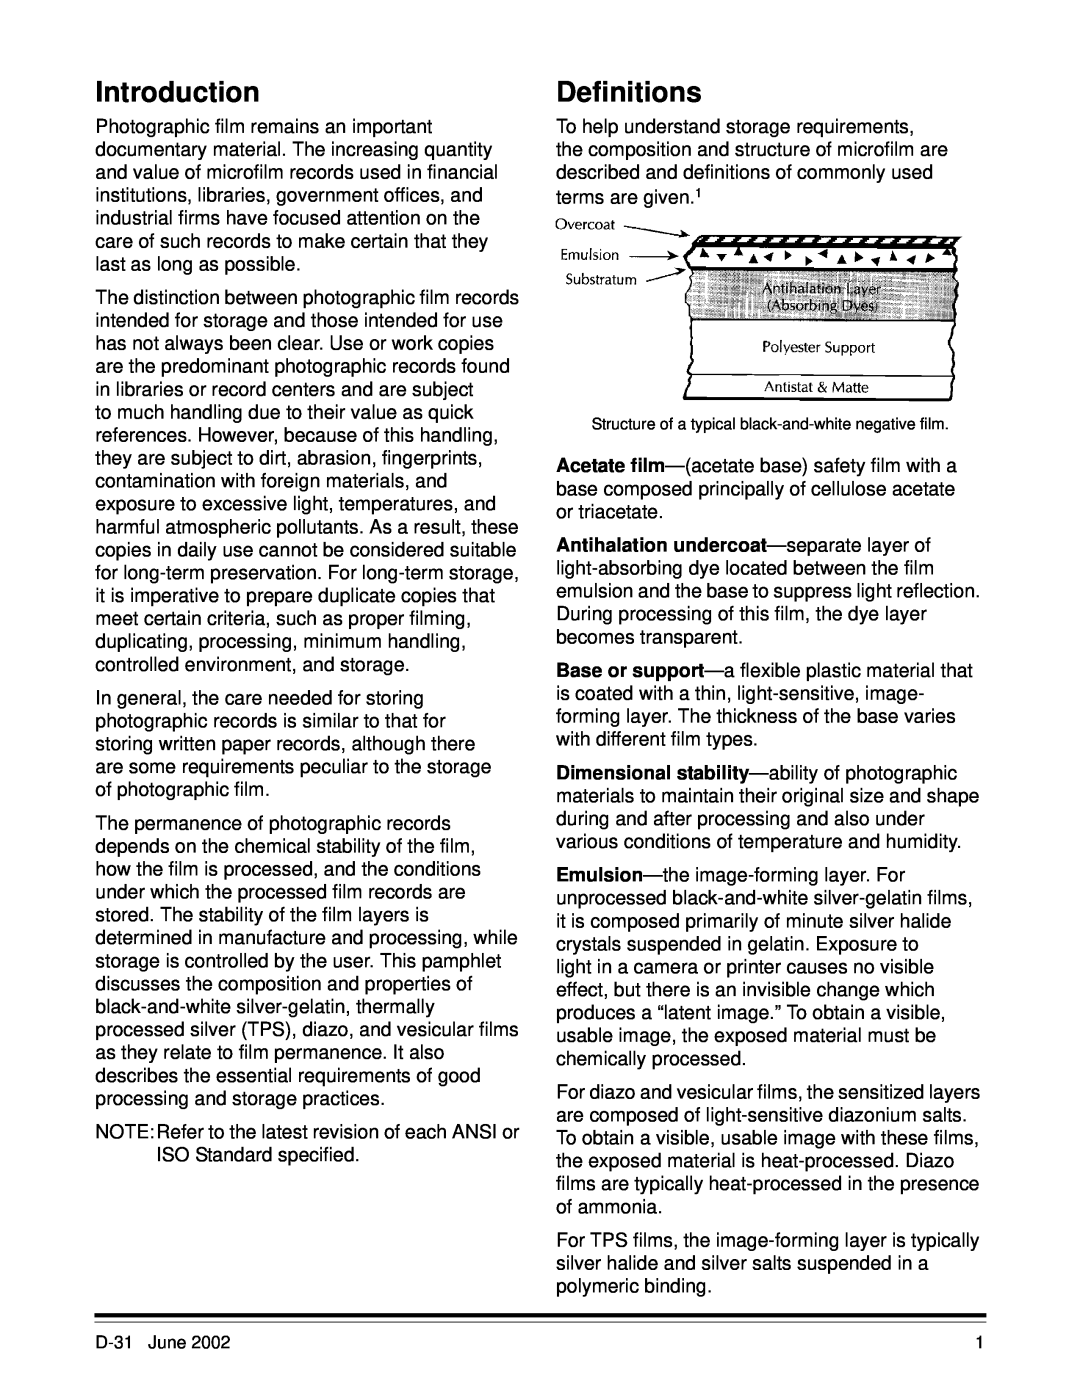 Kodak manual Introduction, Definitions, D-31June 